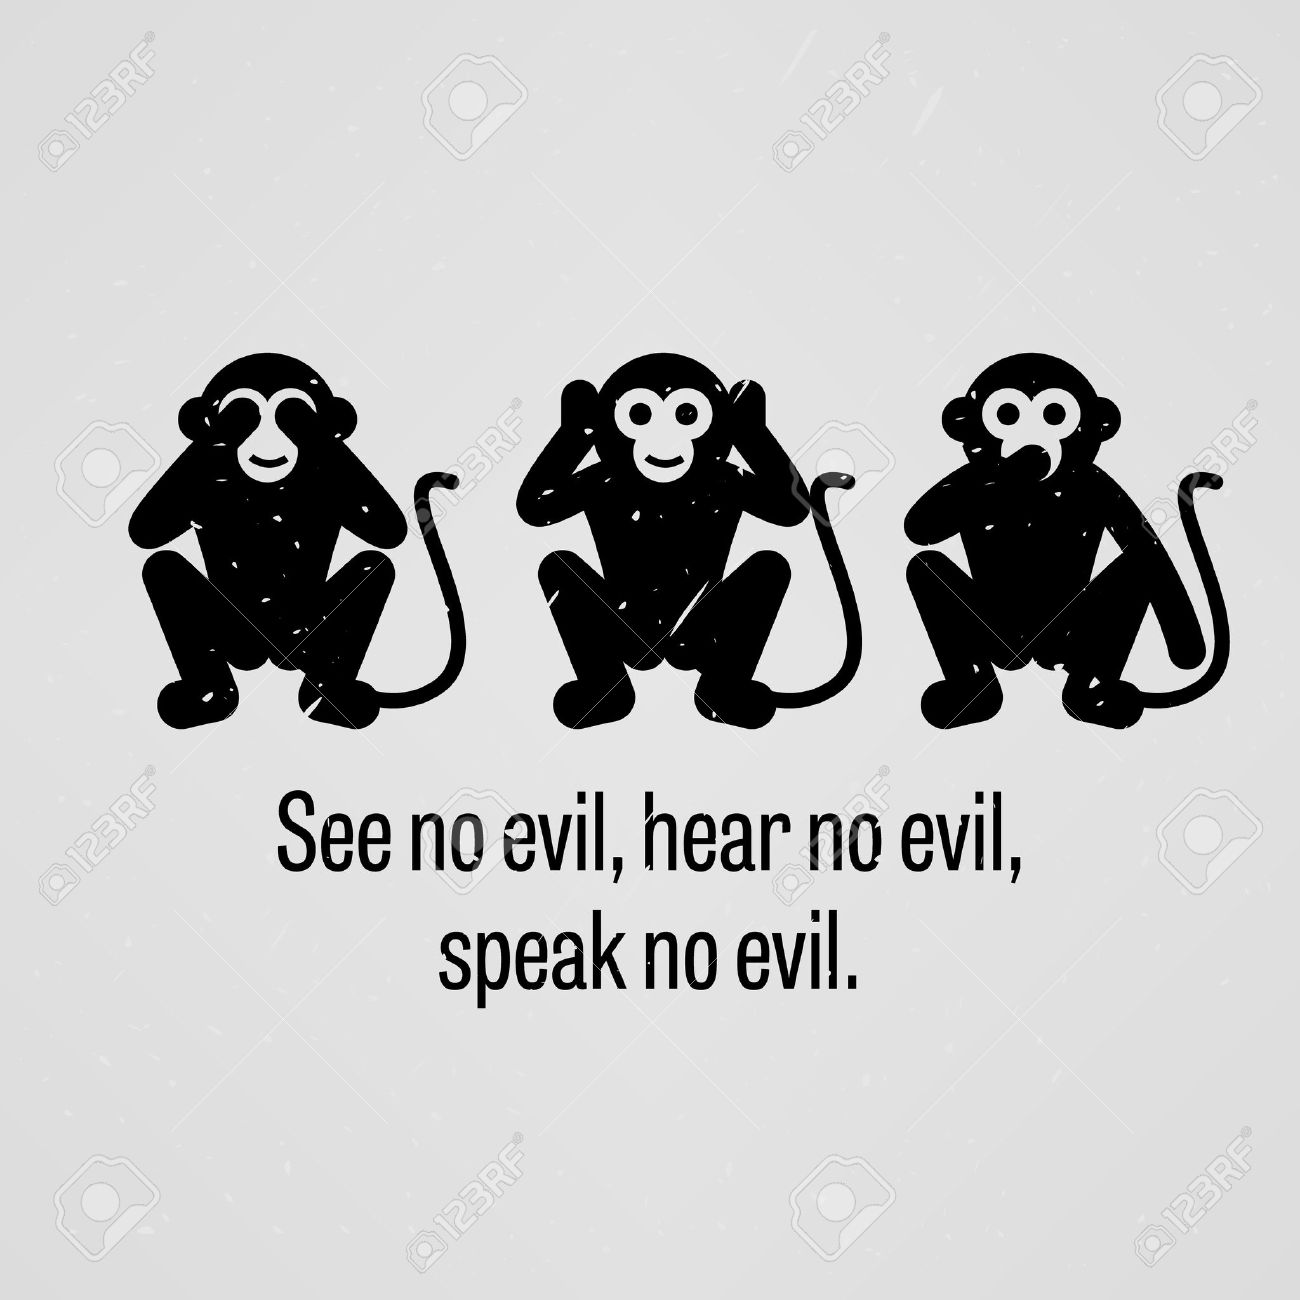 36629312-see-no-evil-hear-no-evil-speak-no-evil.jpg